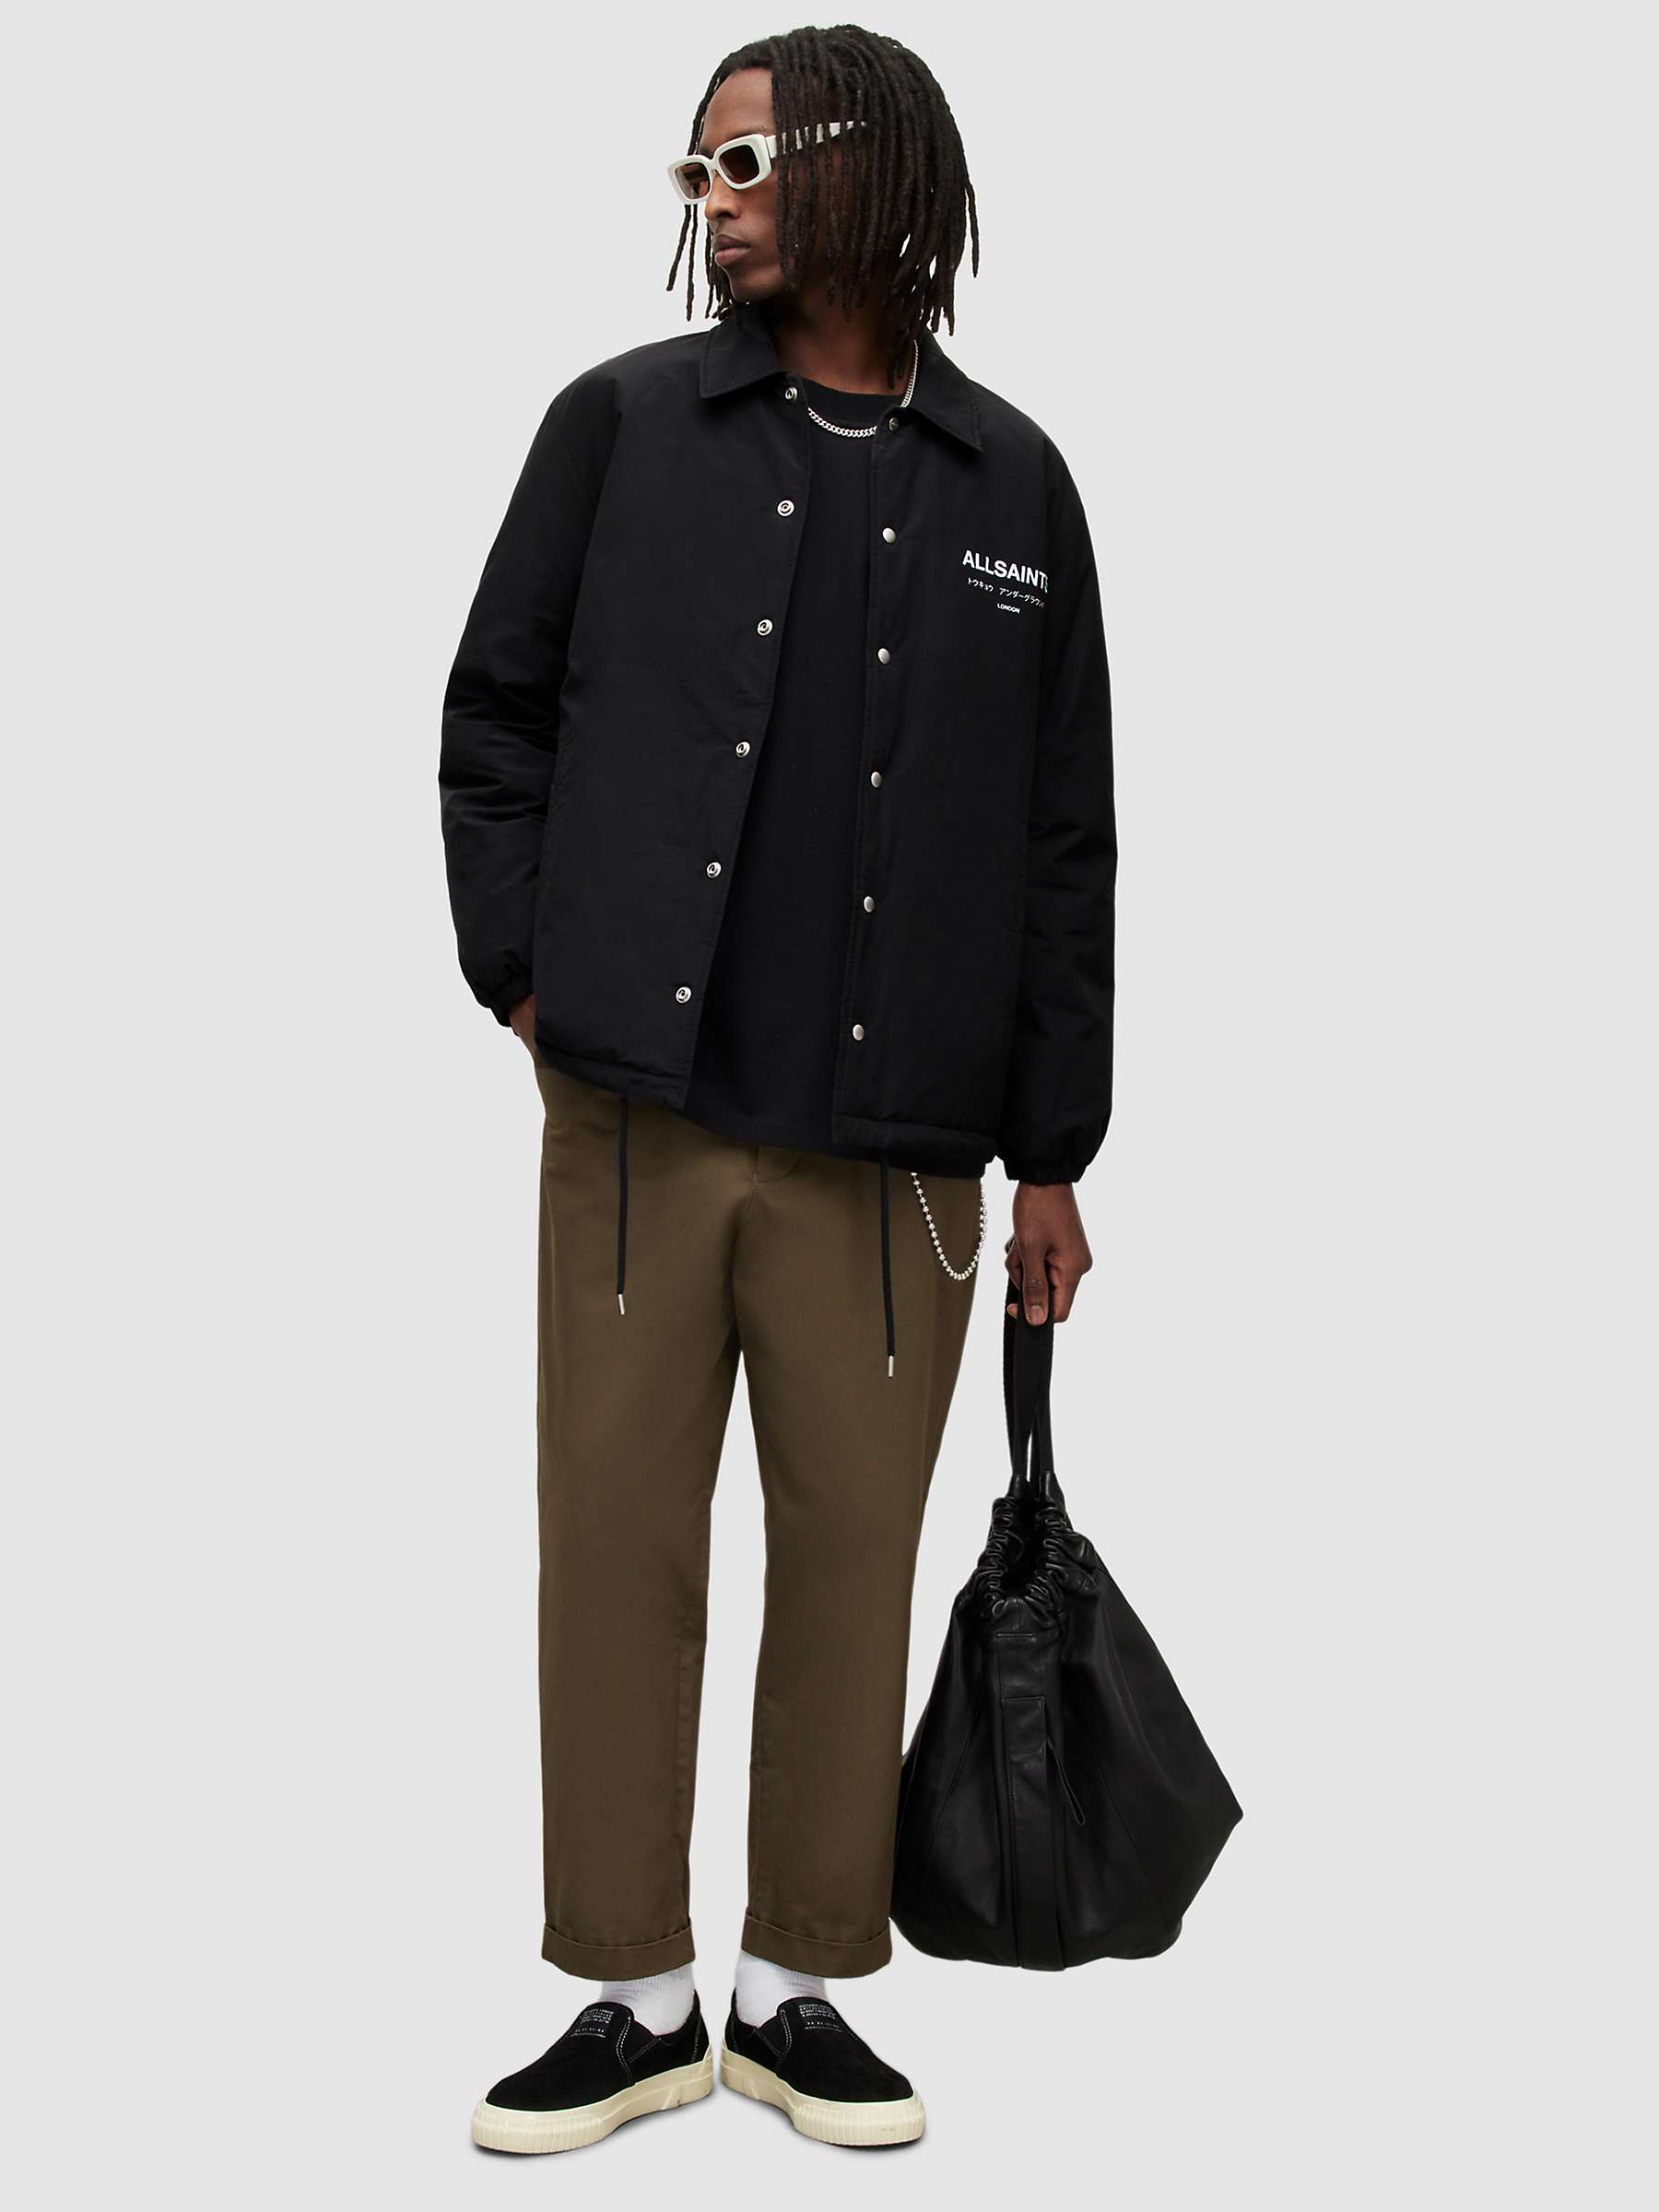 Buy AllSaints Underground Coach Jacket, Black Online at johnlewis.com